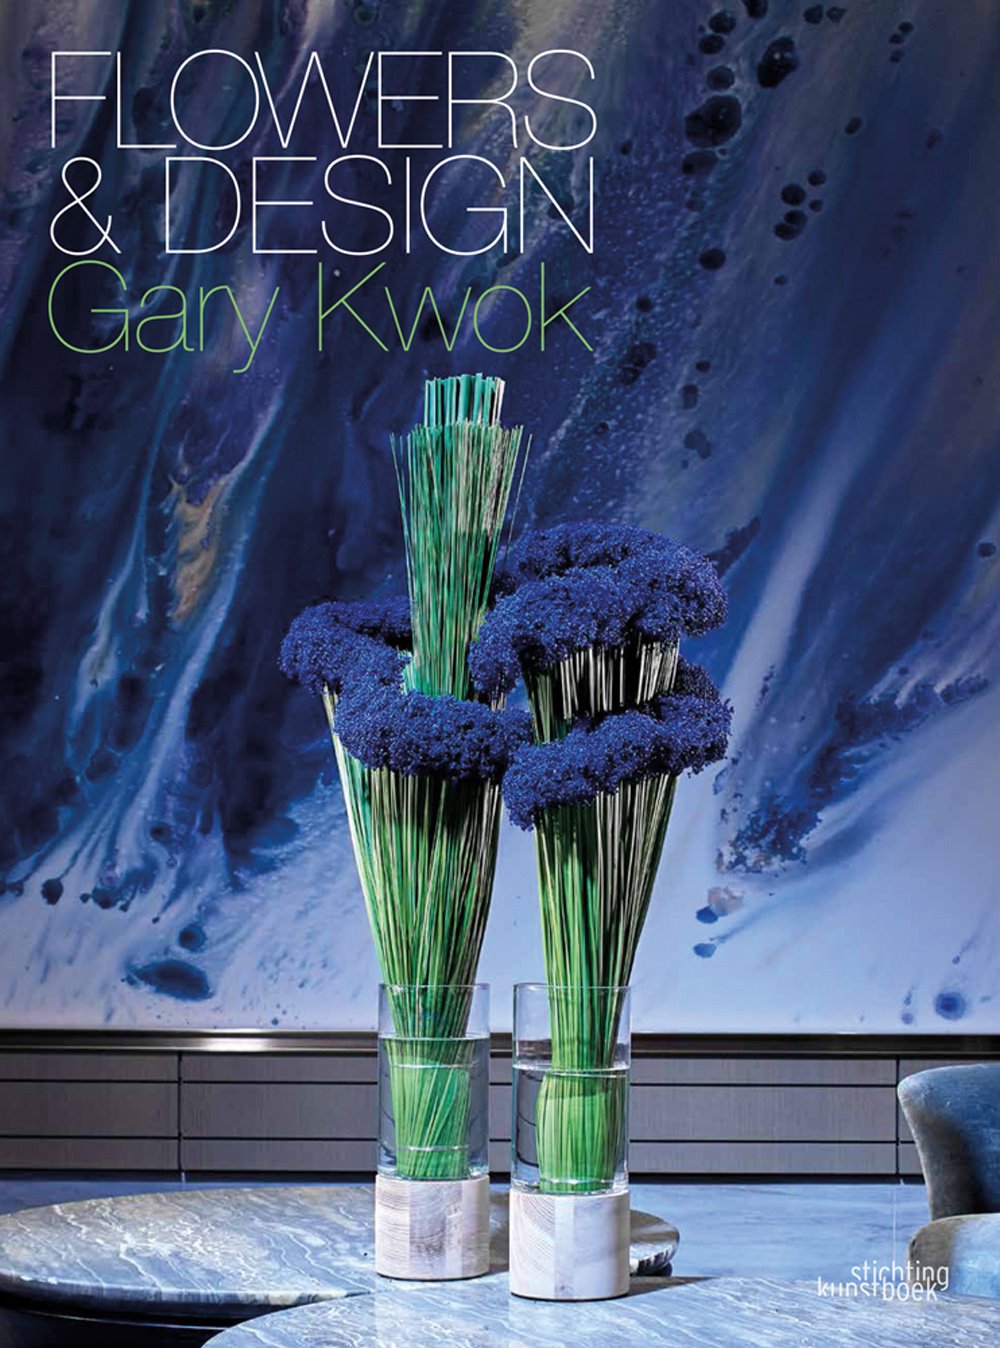 Flowers & Design By Gary Kwok